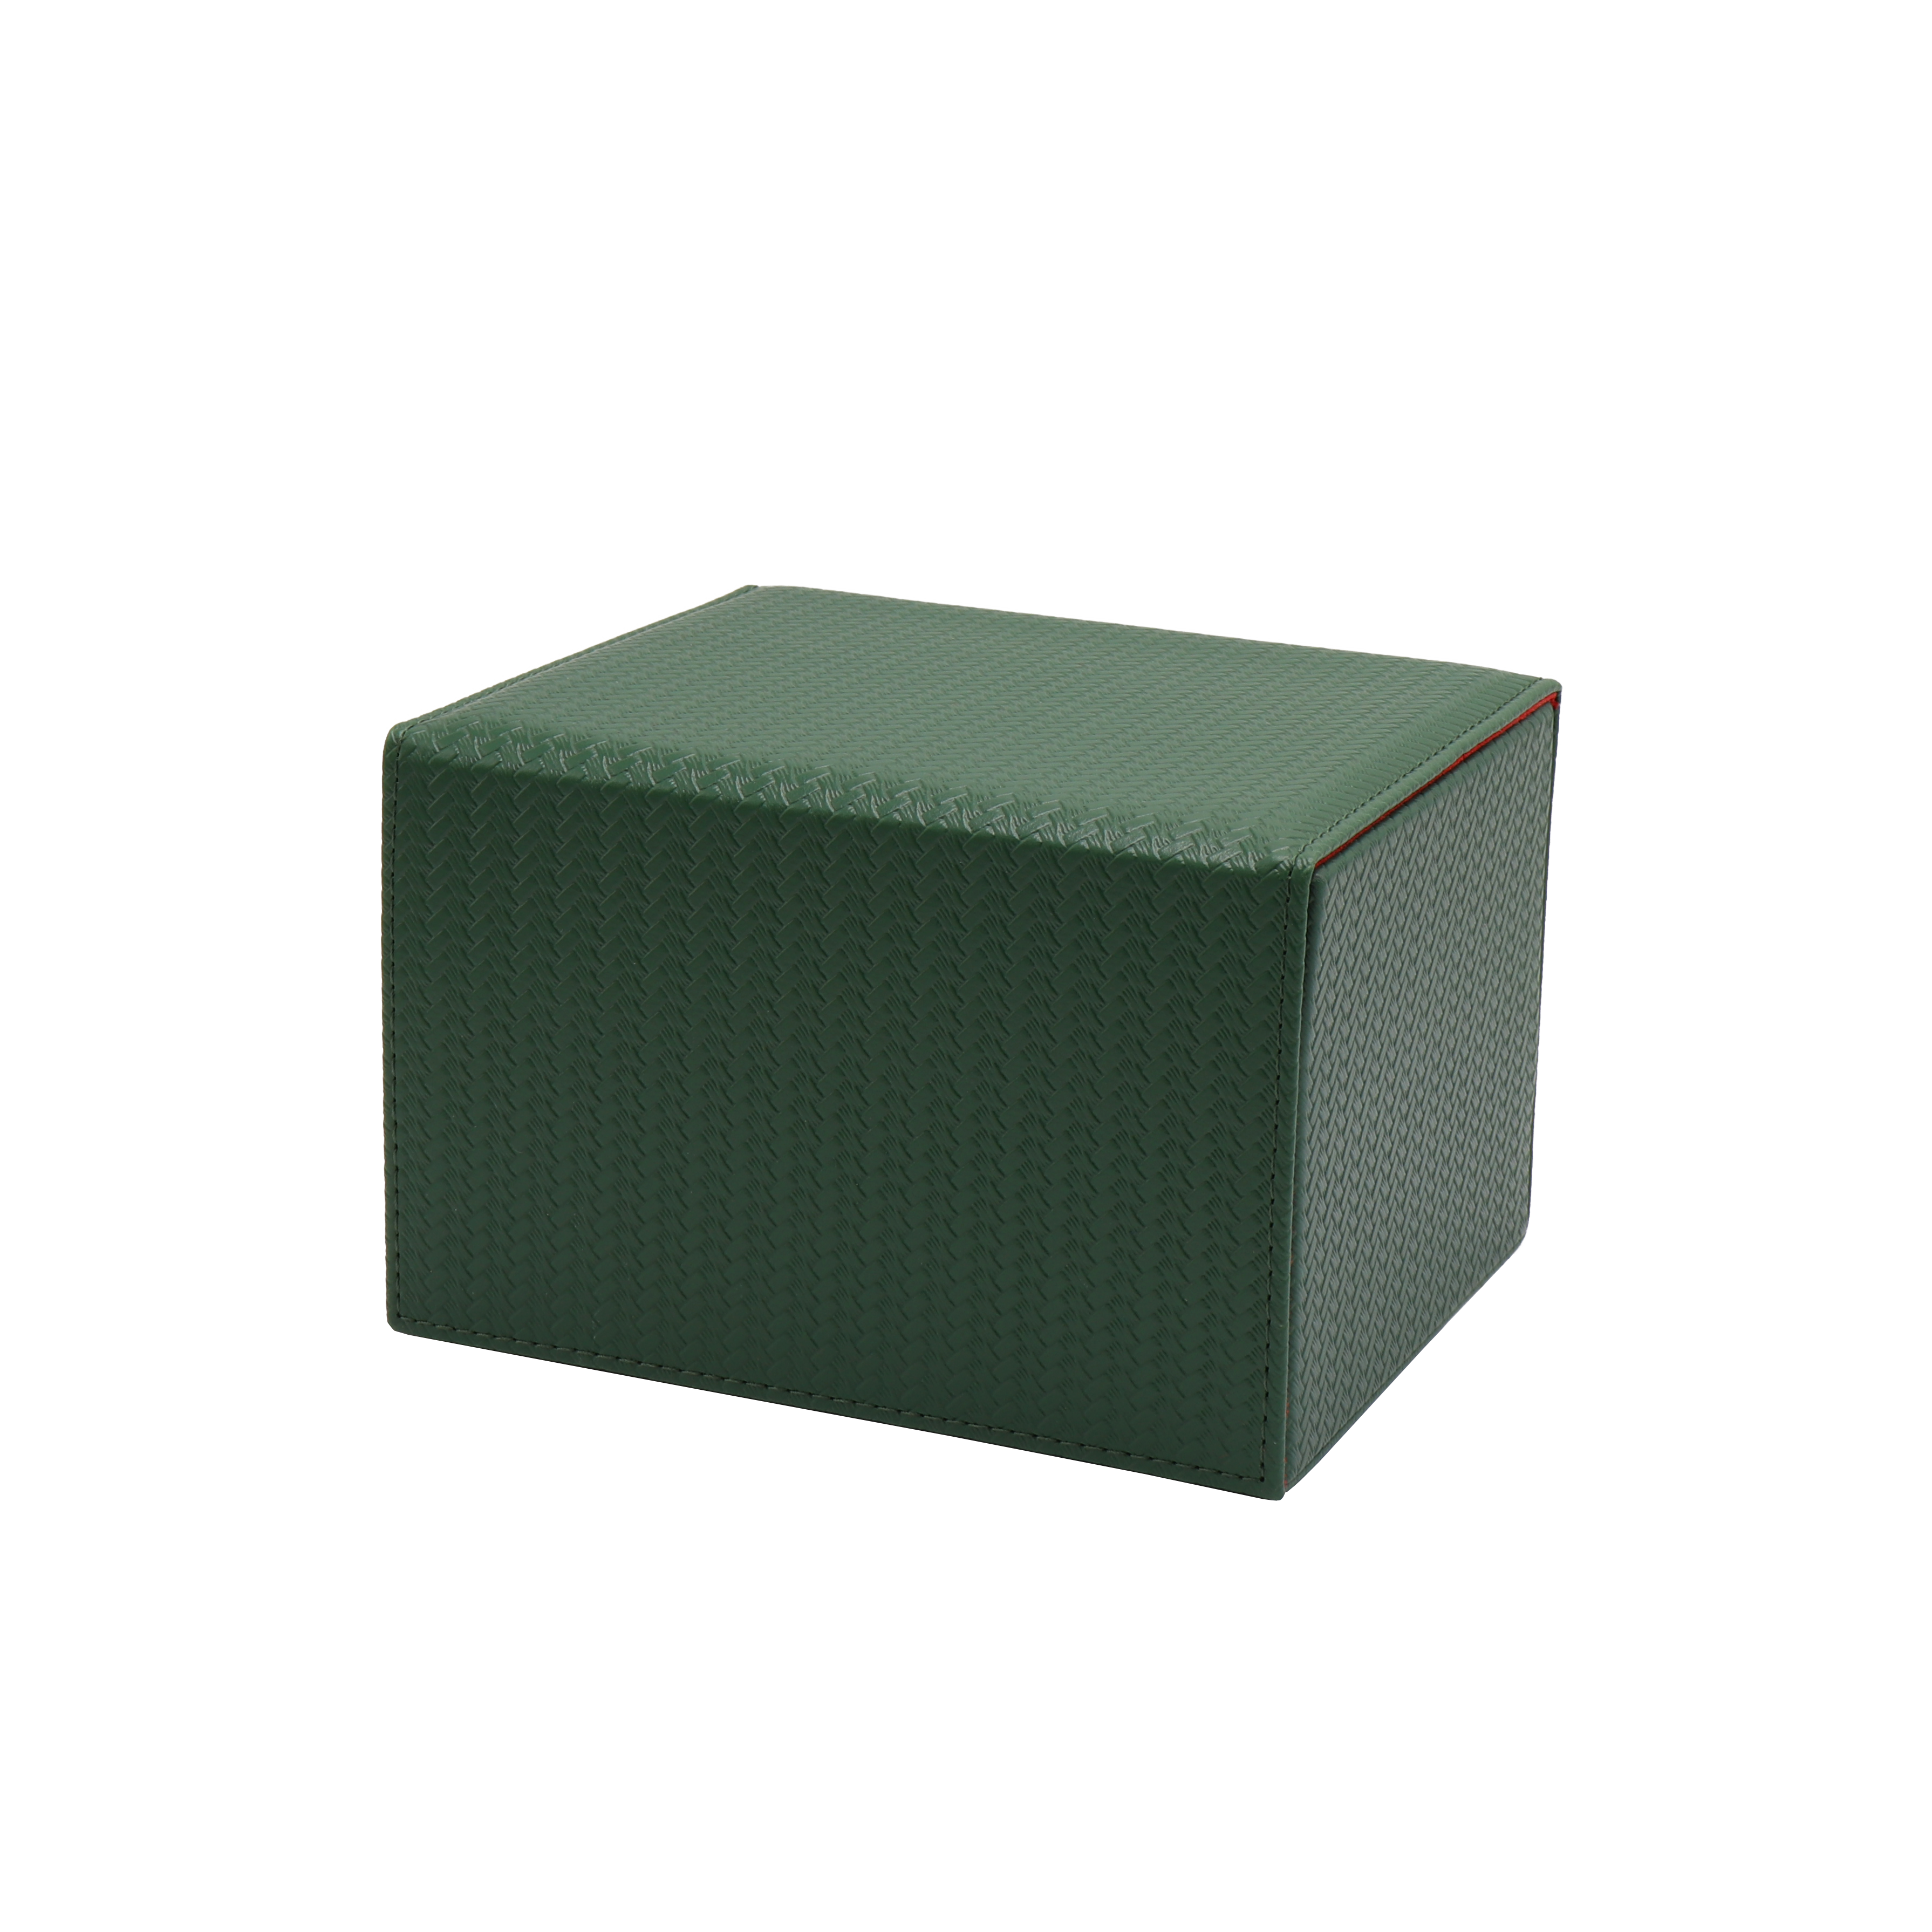 Dex Protection Large Proline Deckbox - Green